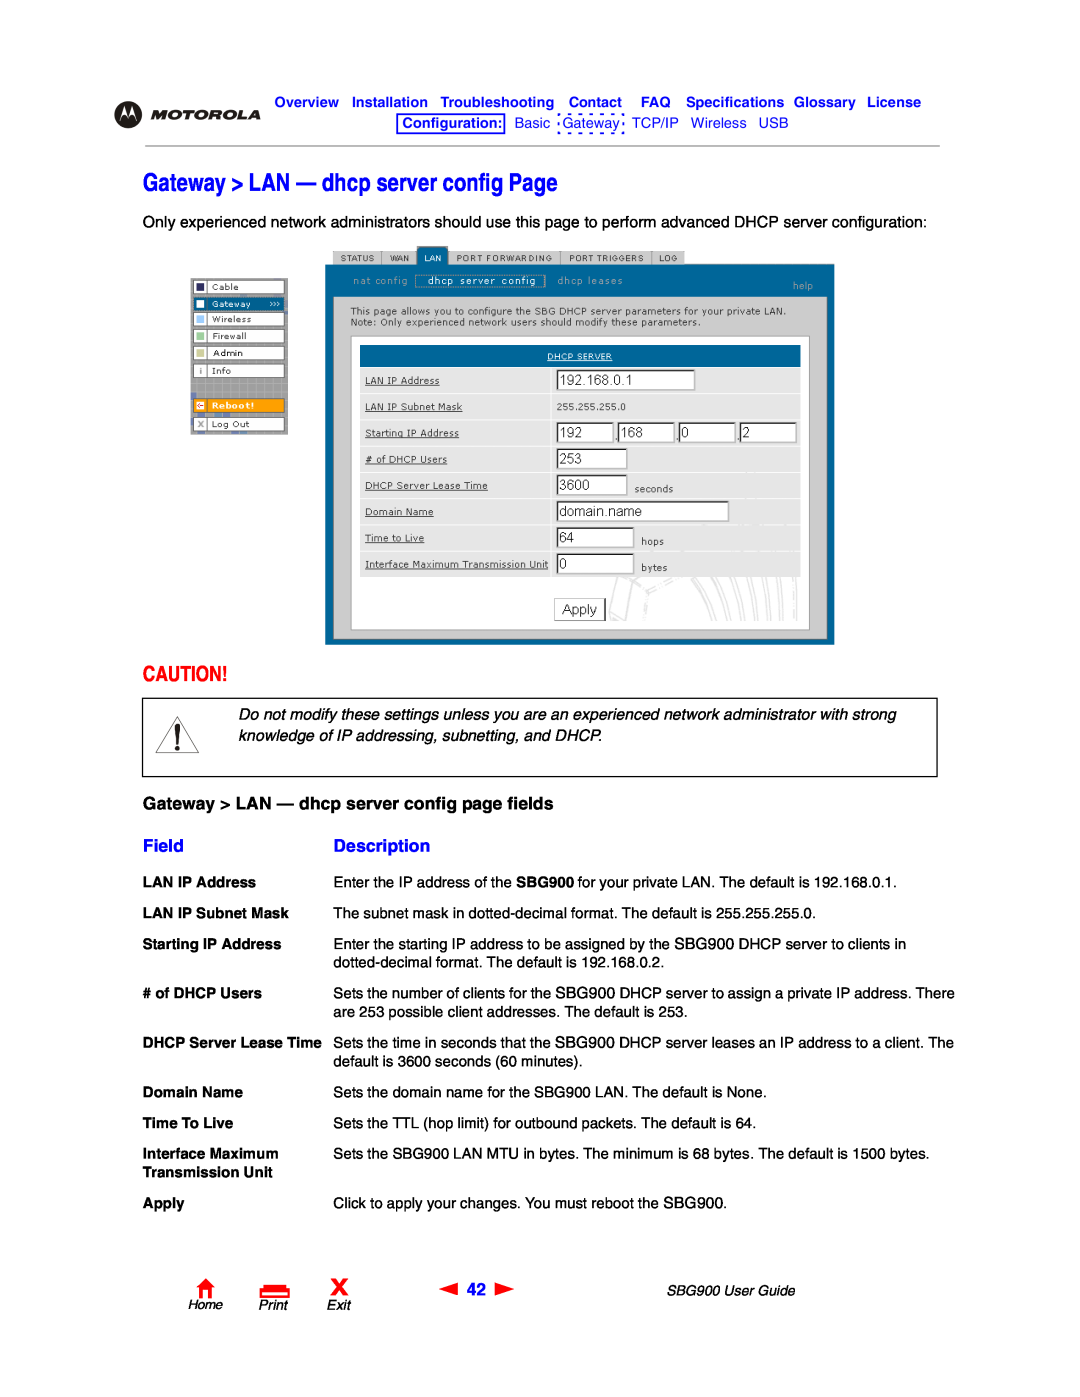 Motorola SBG900 Gateway LAN - dhcp server config Page, Gateway LAN - dhcp server config page fields, Field, Description 